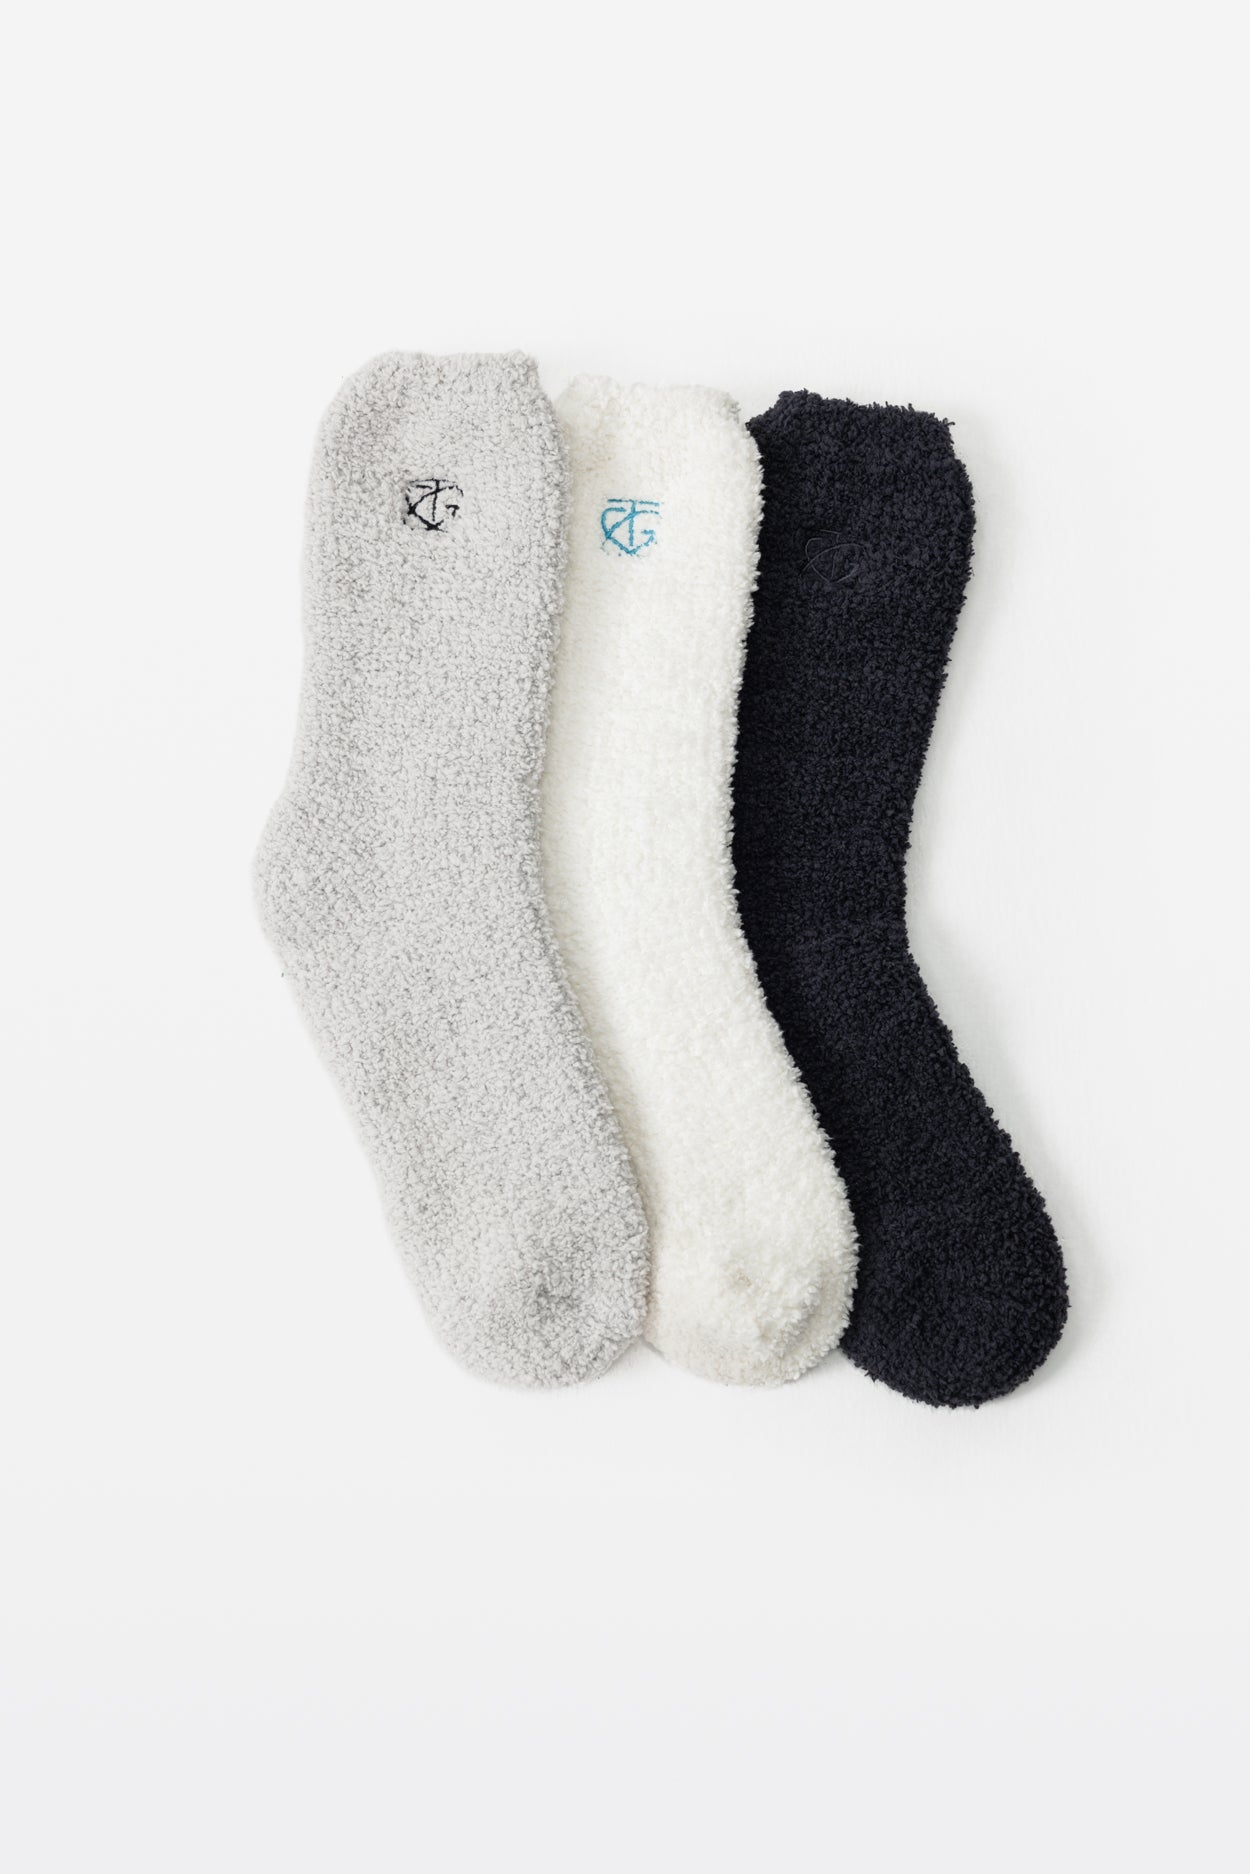 Creme Soft Plush Socks - Socks - Touchofgod.co